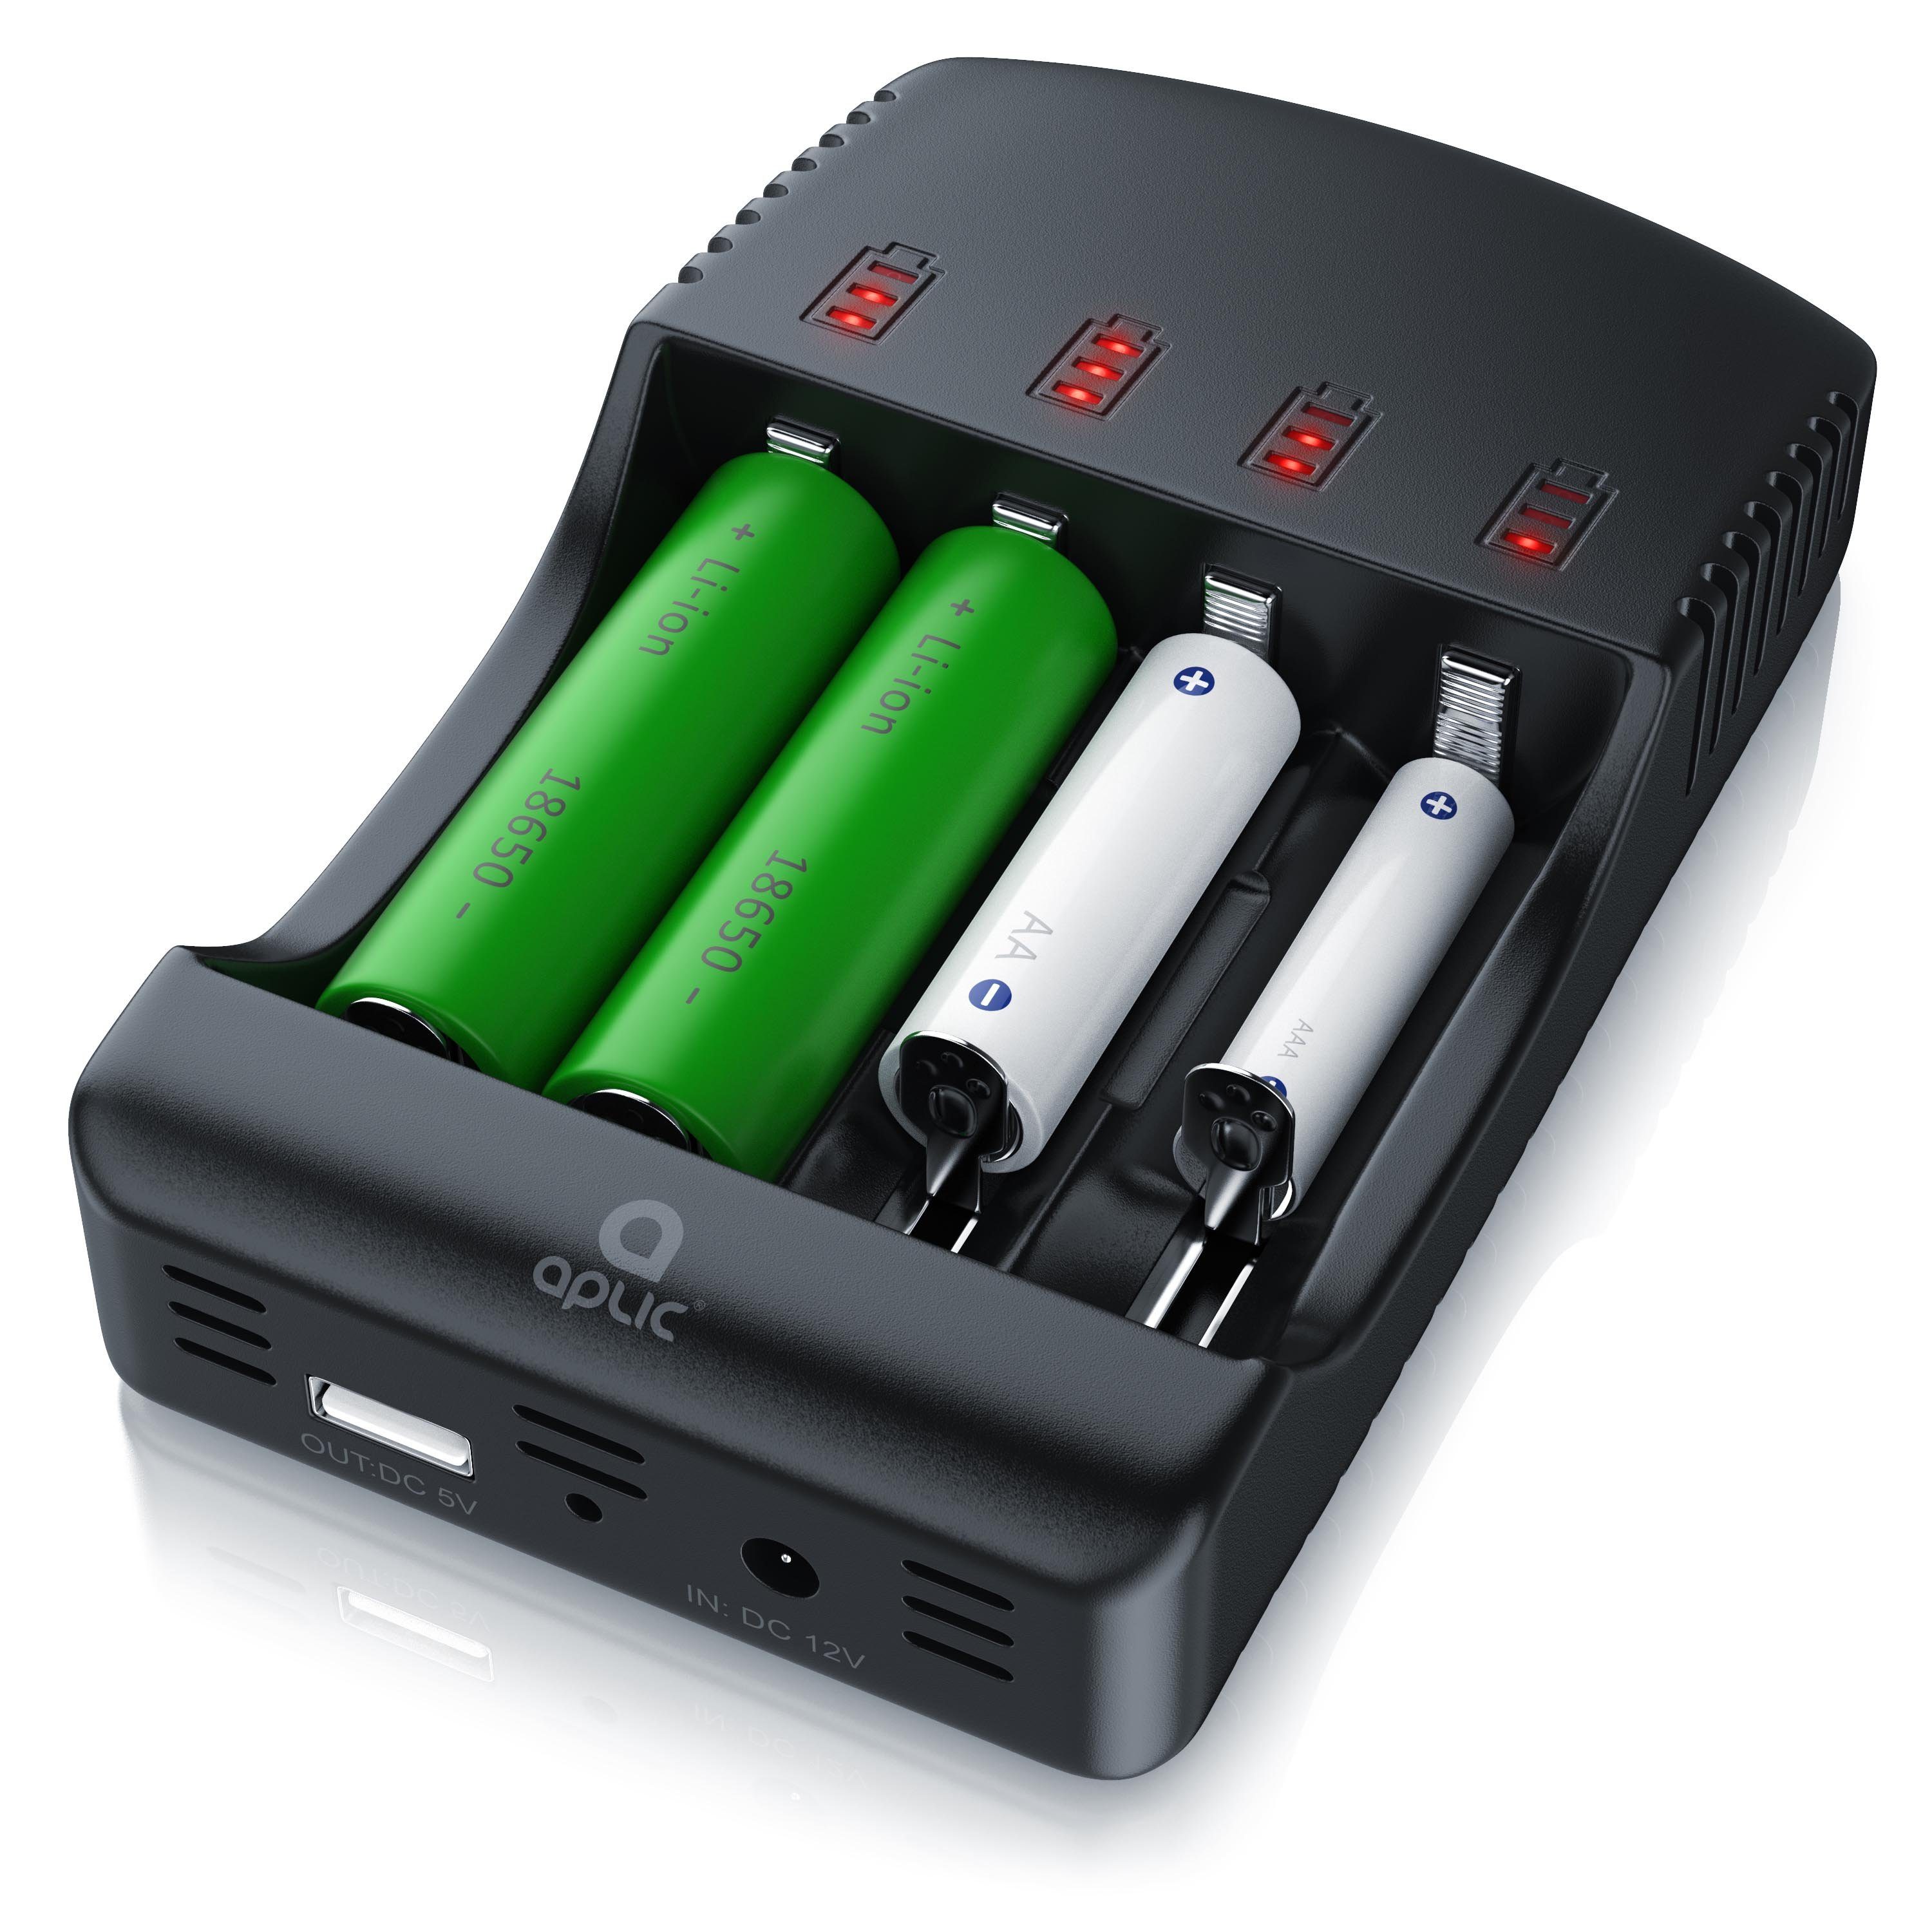 Aplic Batterie-Ladegerät (2000 mA, Universal Batterie Ladegerät mit USB  Ladeport Powerbankfunktion / 4x Aufladeschächte) online kaufen | OTTO